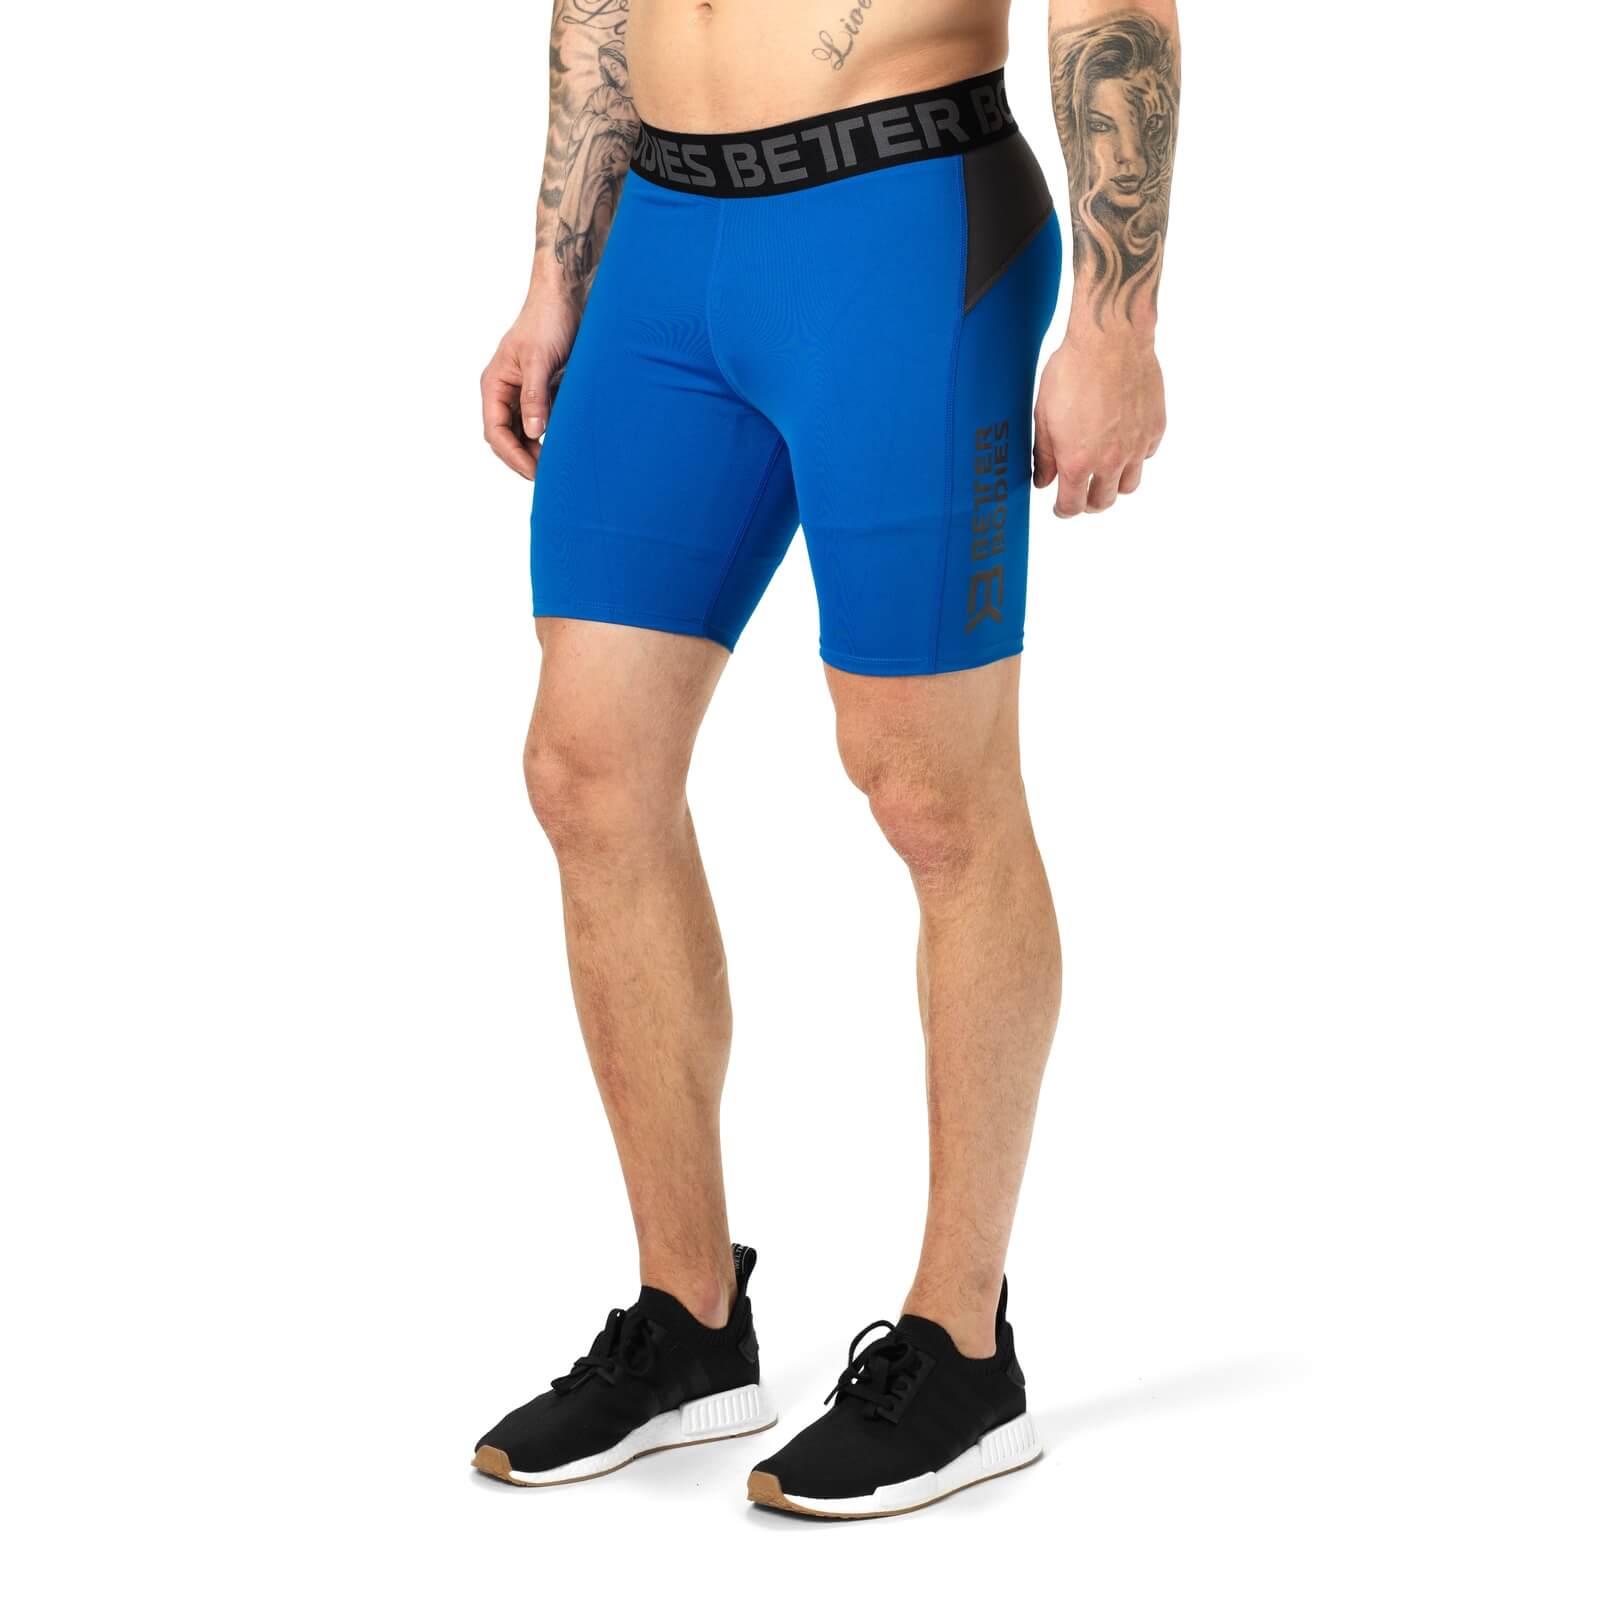 Sjekke Compression Shorts, strong blue, Better Bodies hos SportGymButikken.no